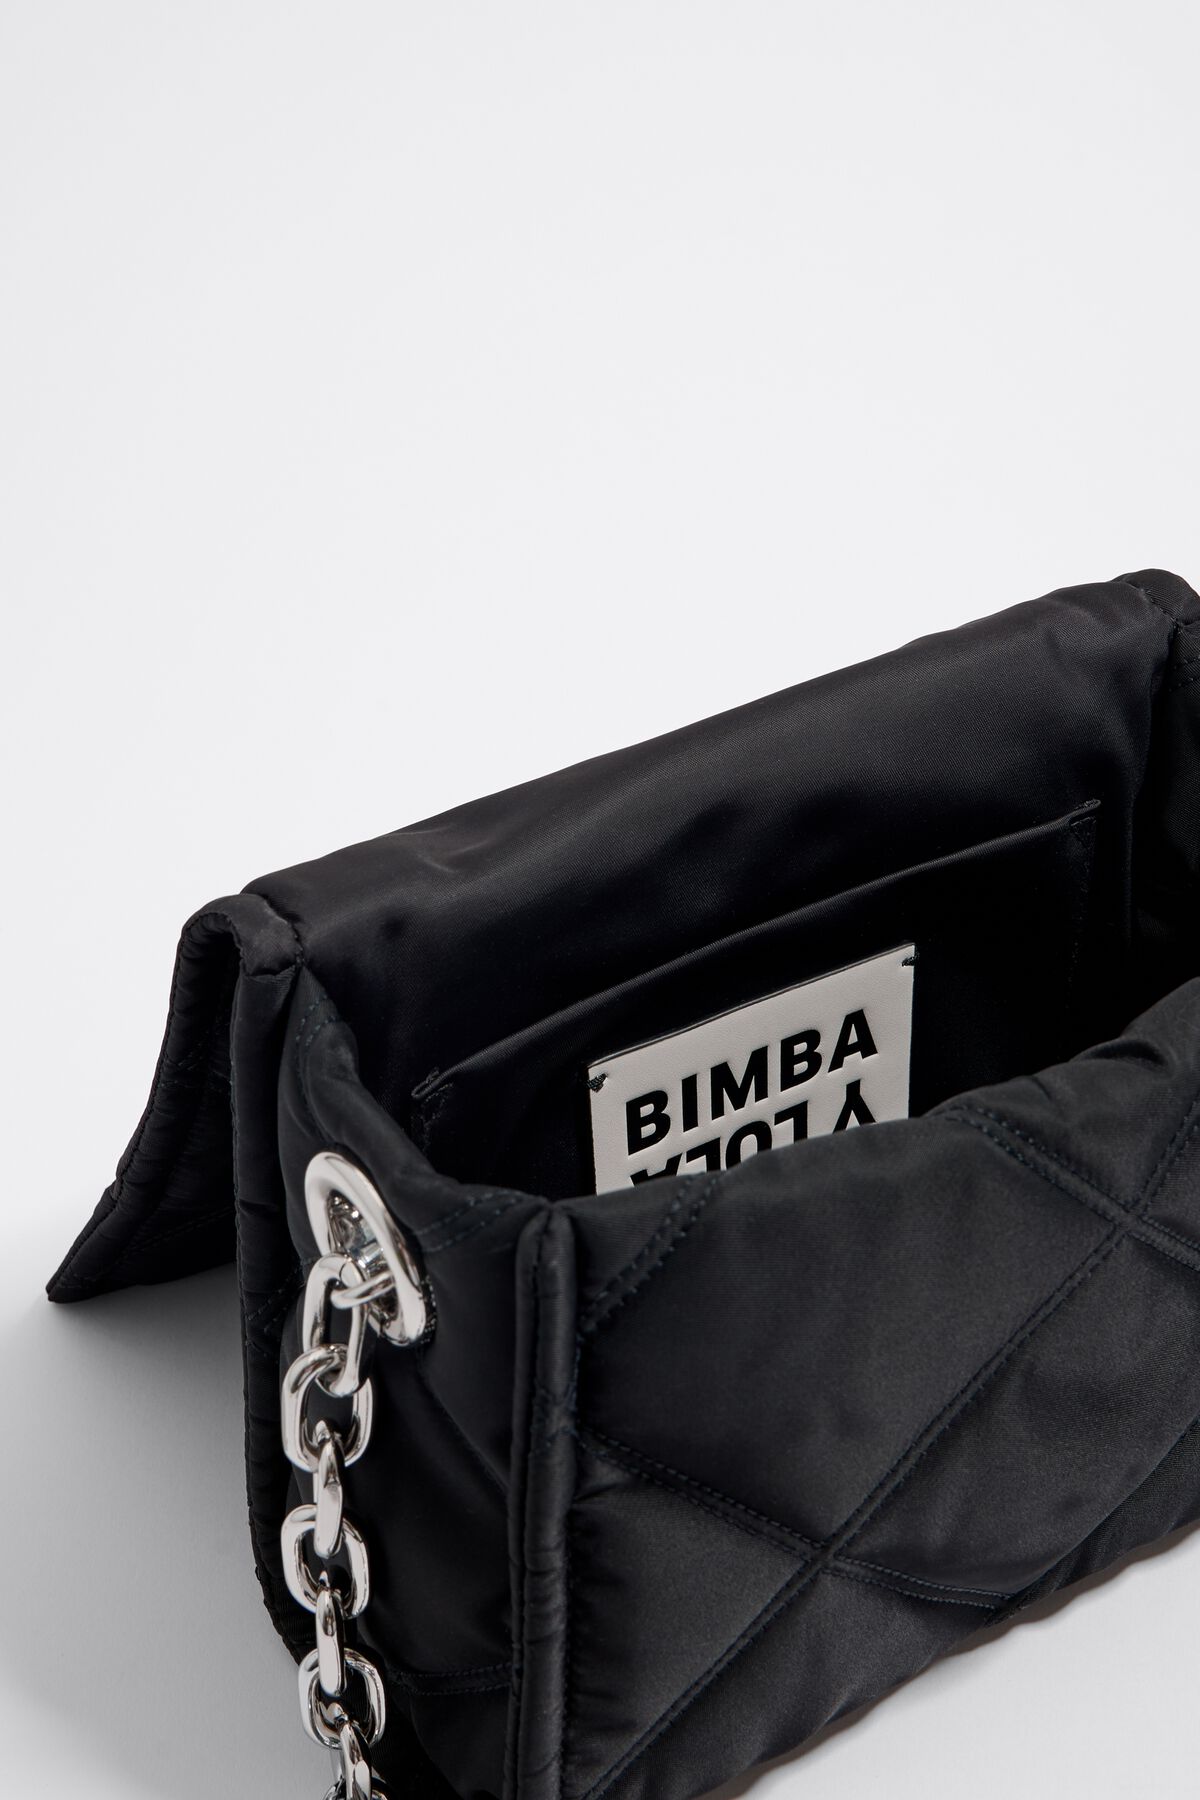 S black nylon crossbody bag with flap